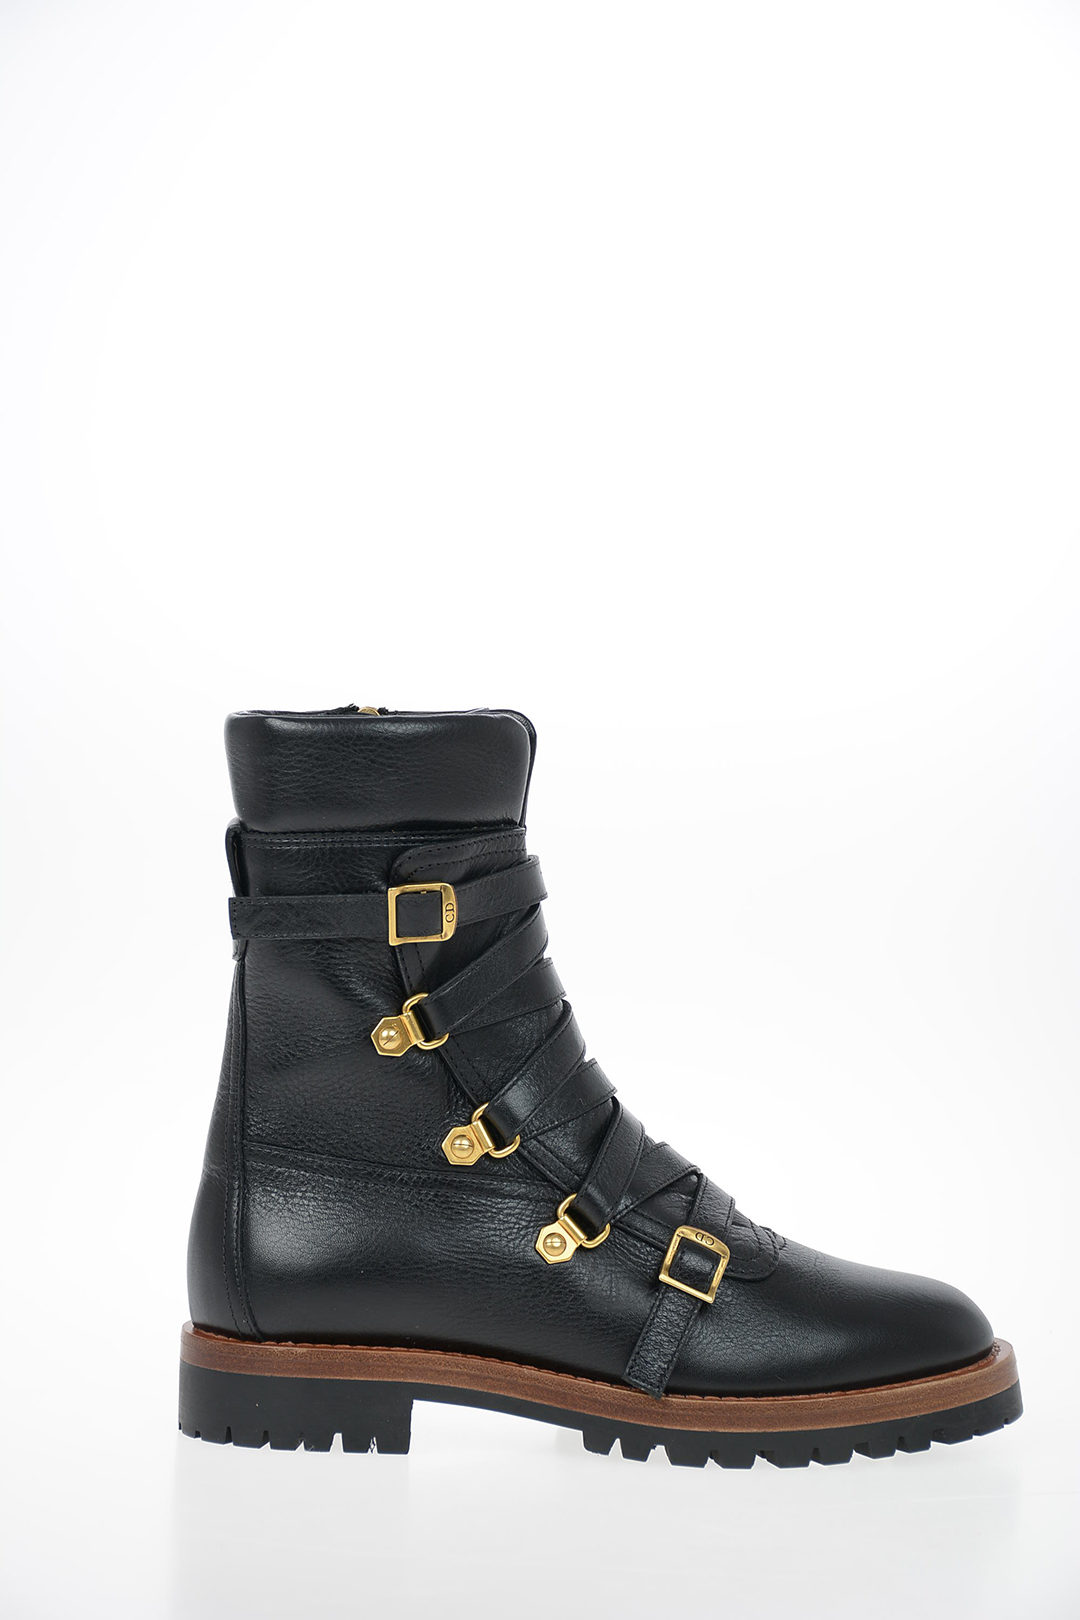 Dior Leather WILDIOR Hiking Boots women 